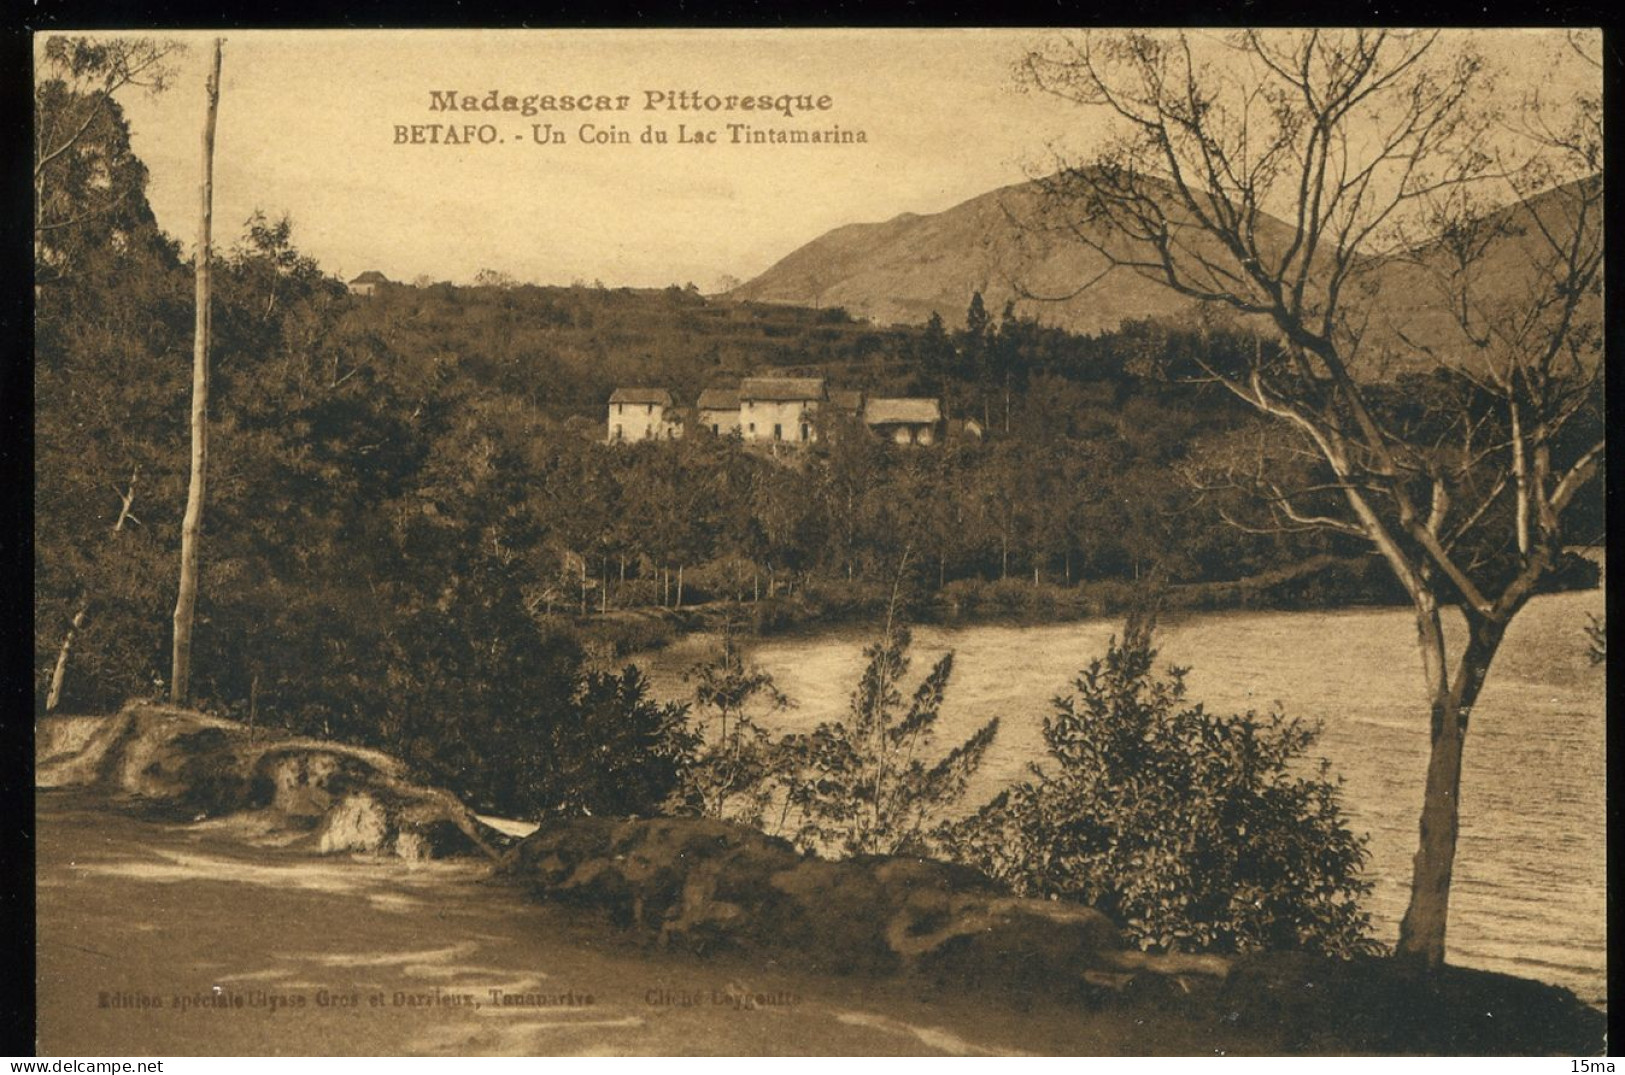 Betafo Un Coin Du Lac Tintamarina Madagascar Pittoresque Gros Et Darrieux 1925 - Madagaskar